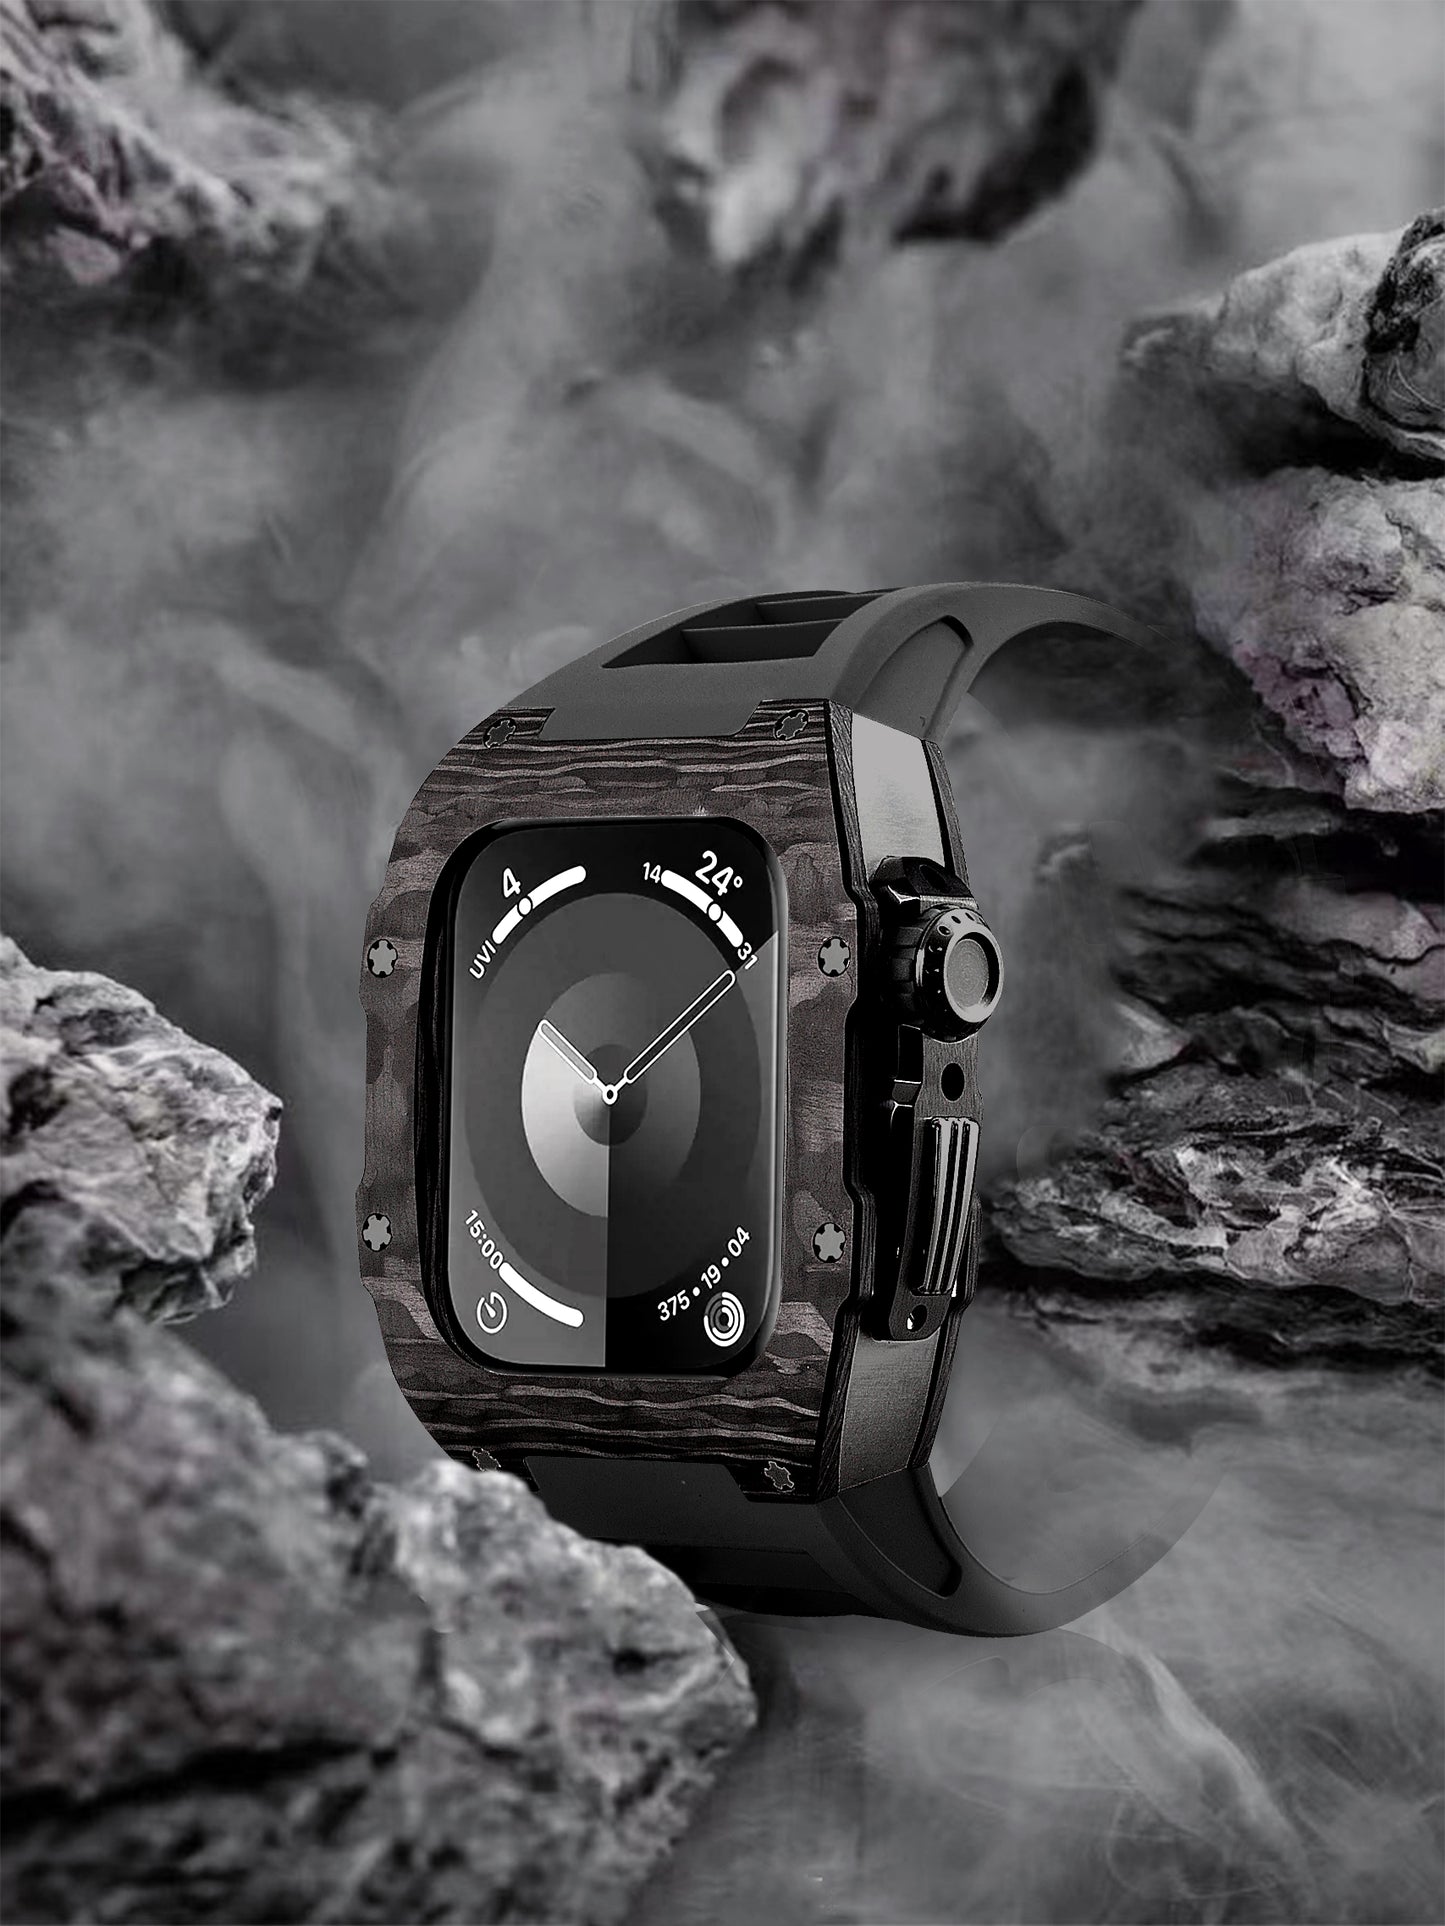 Apple Watch Case 44mm - Carbon Fiber Ti Black Case + White Fluoro Strap (8 Screws)